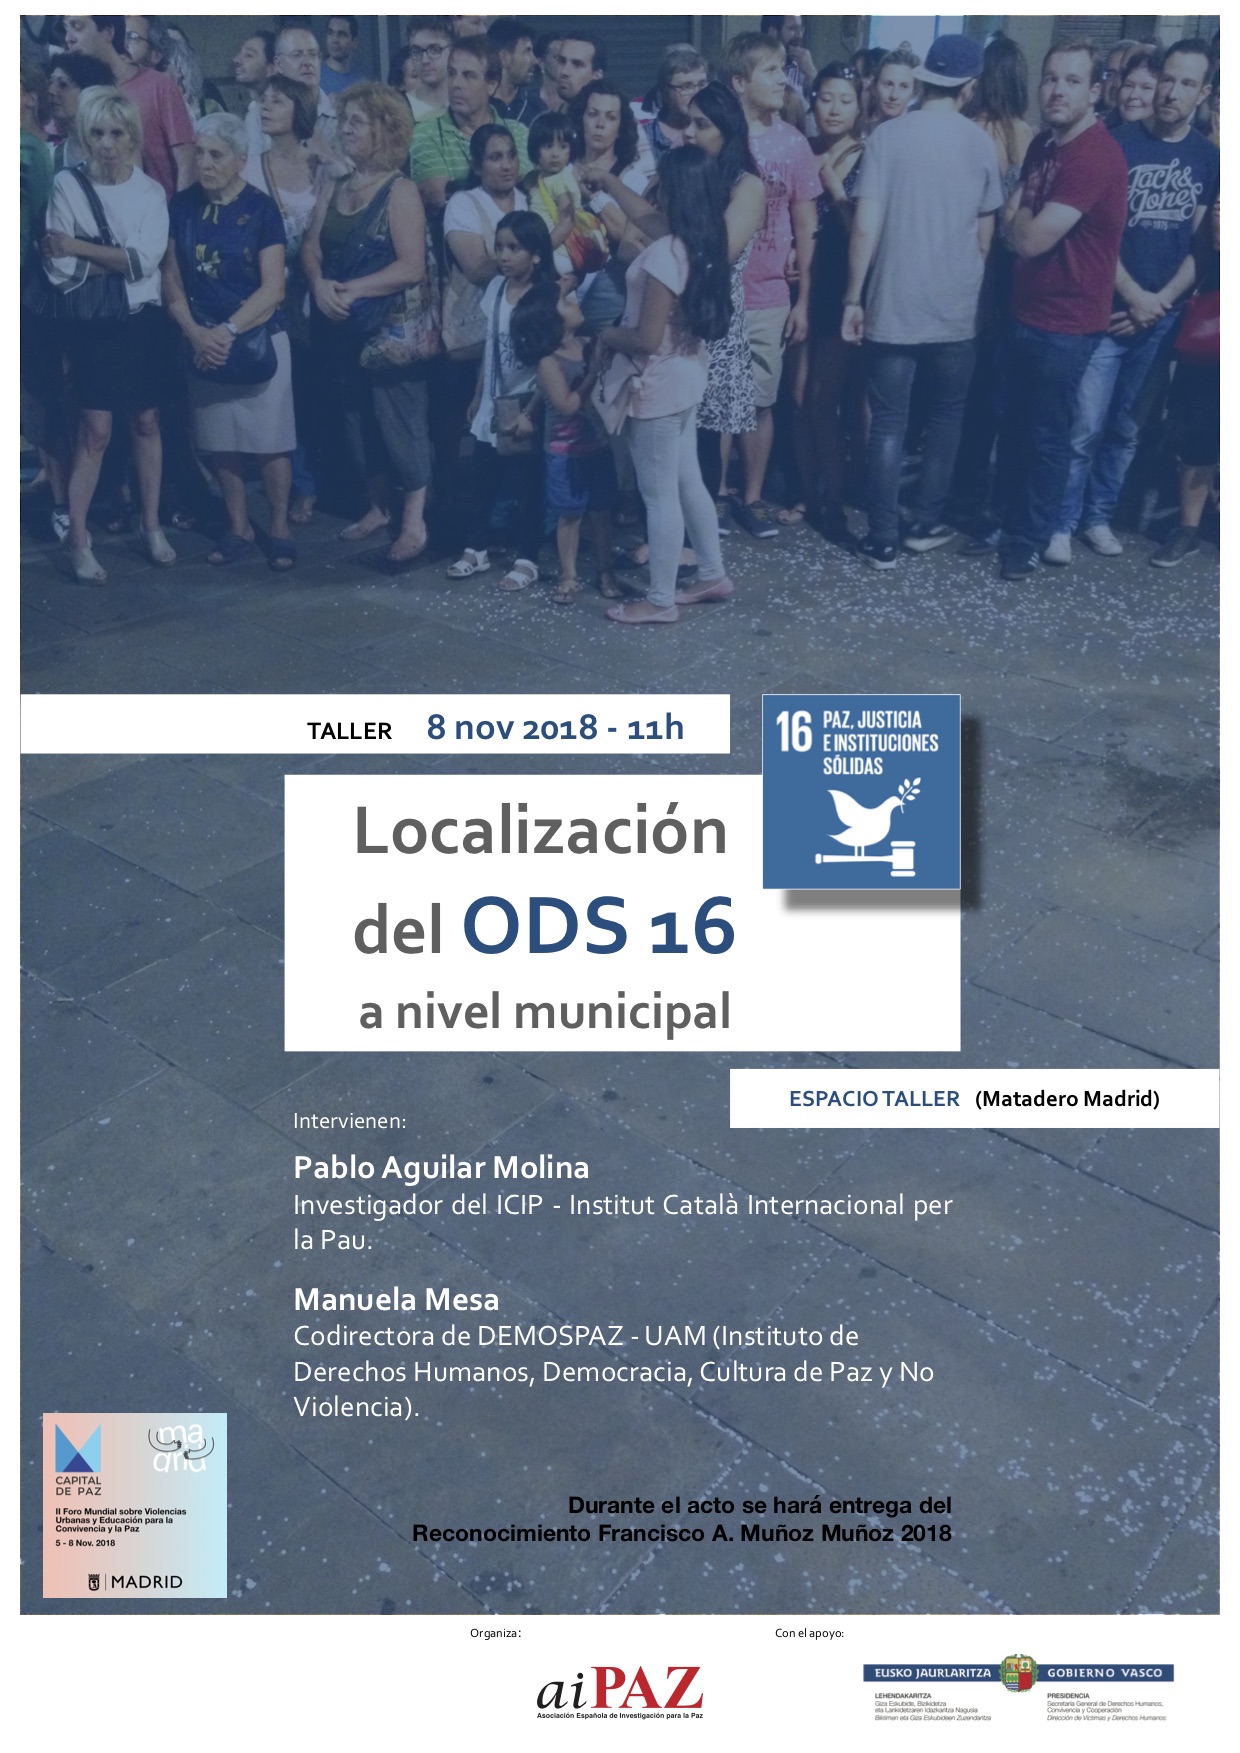 Localización del ODS 16 a nivel municipal